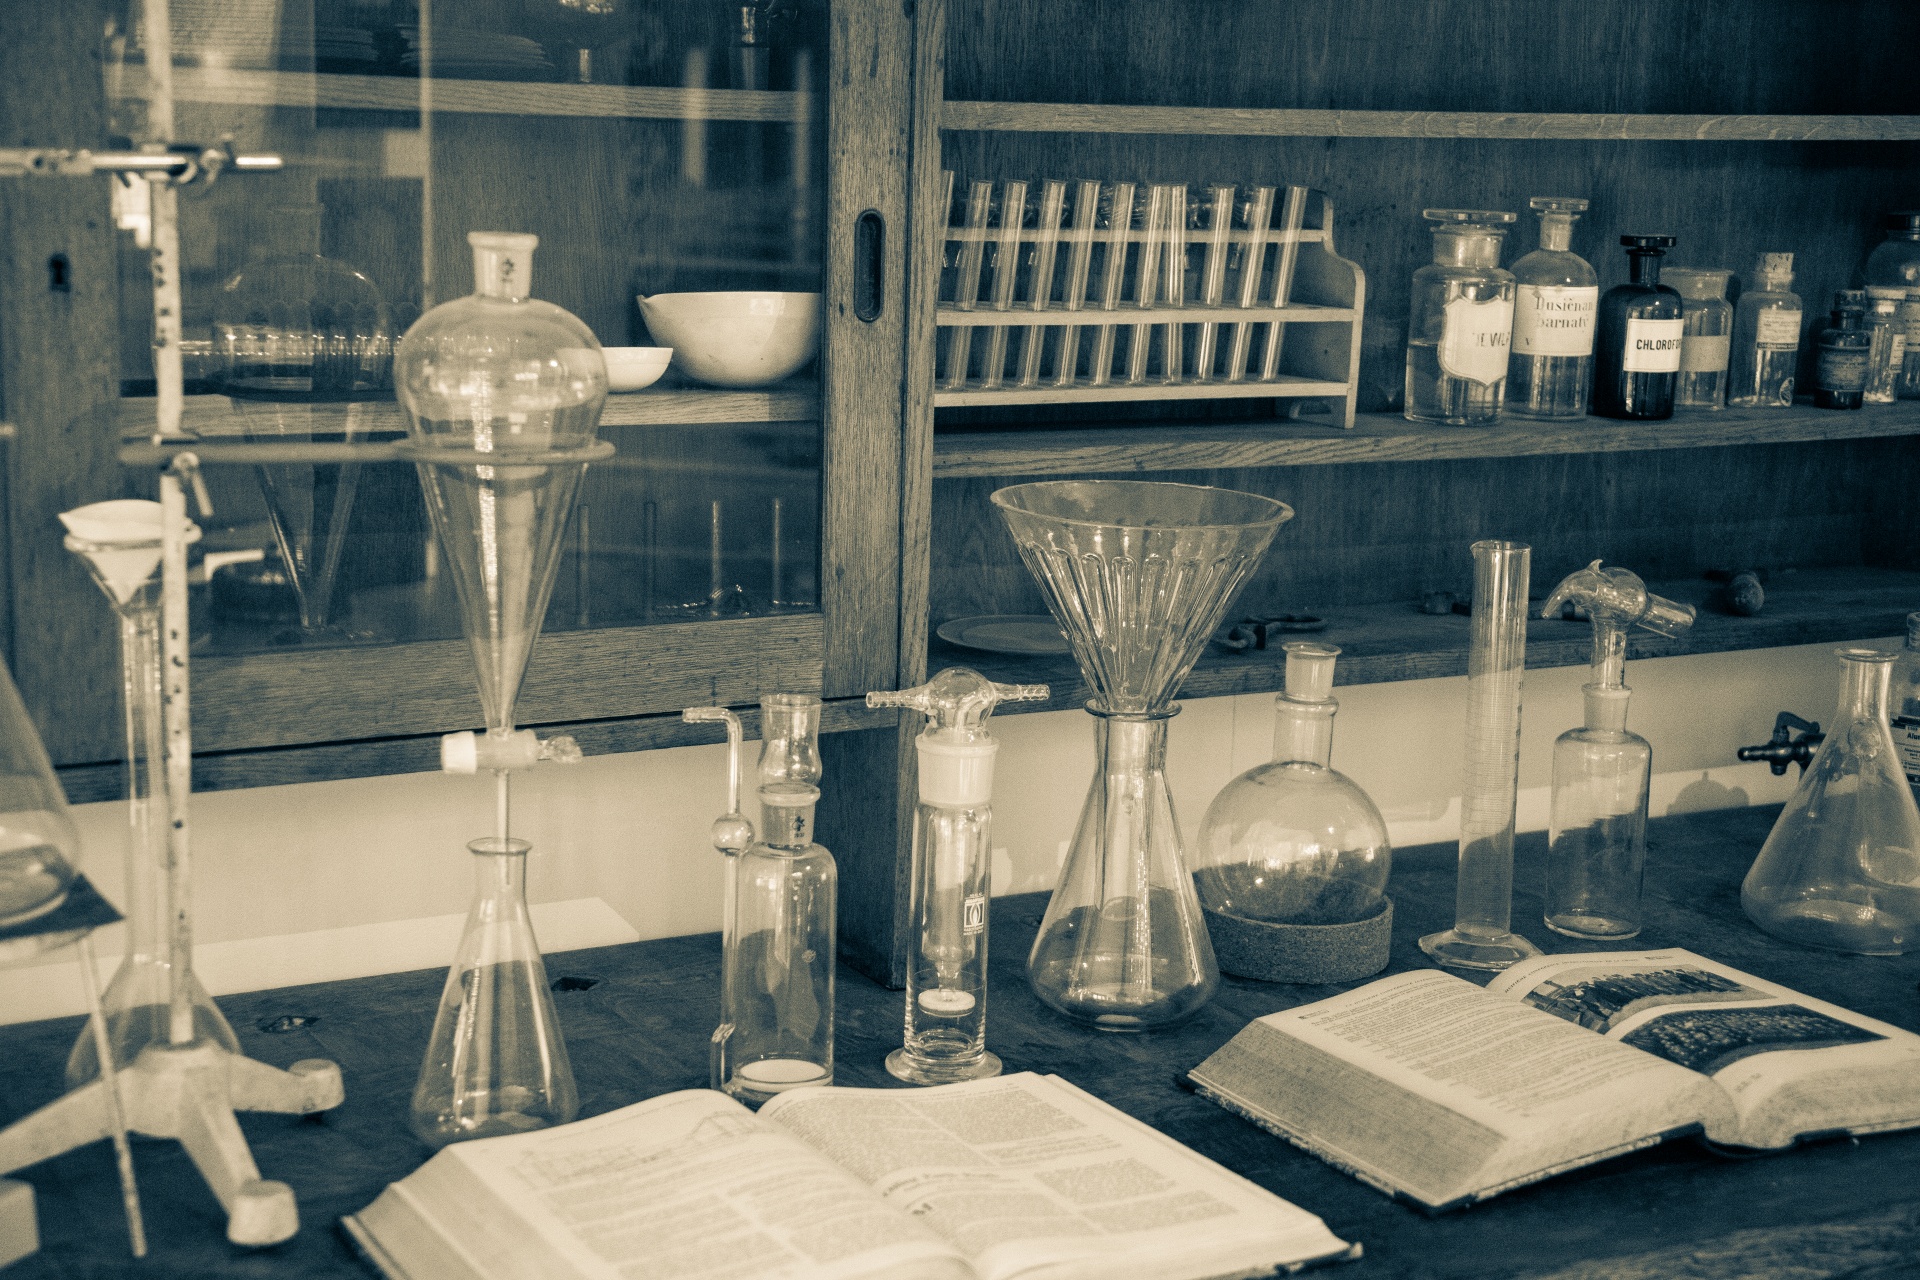 Vintage laboratory equipment and books